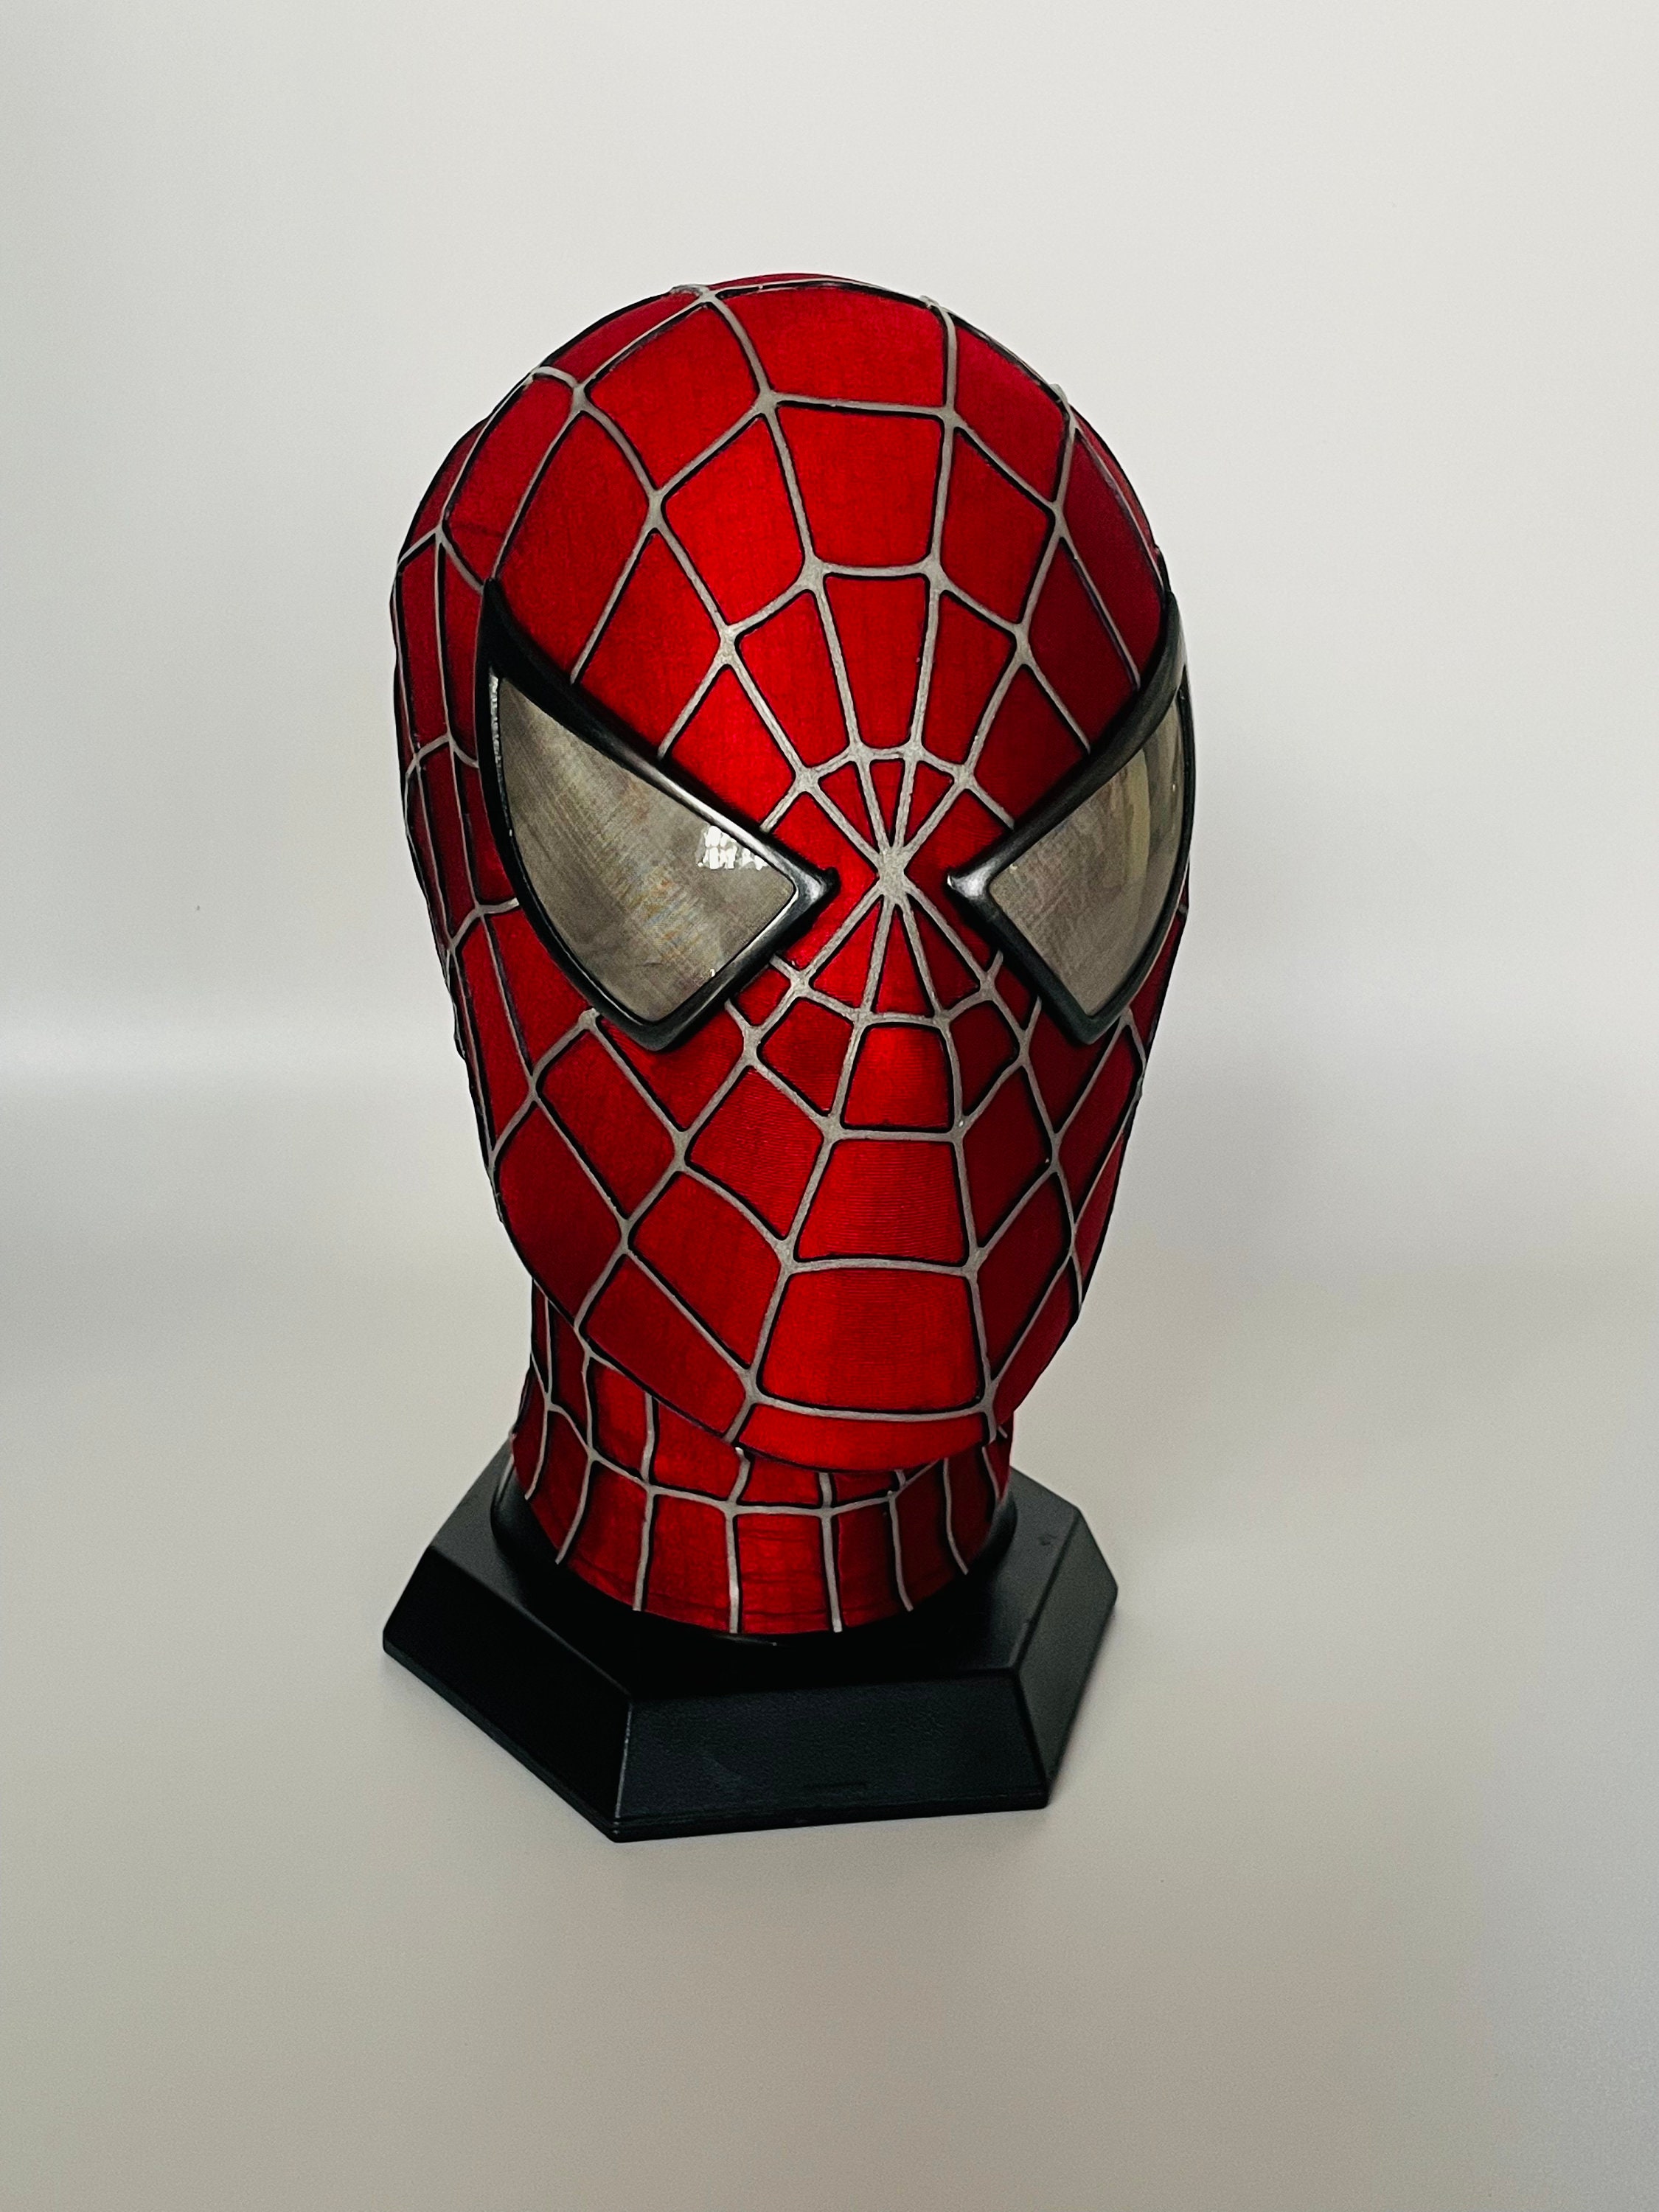 Masque Sam Raimi Spiderman personnalisé Masque Spiderman cosplay